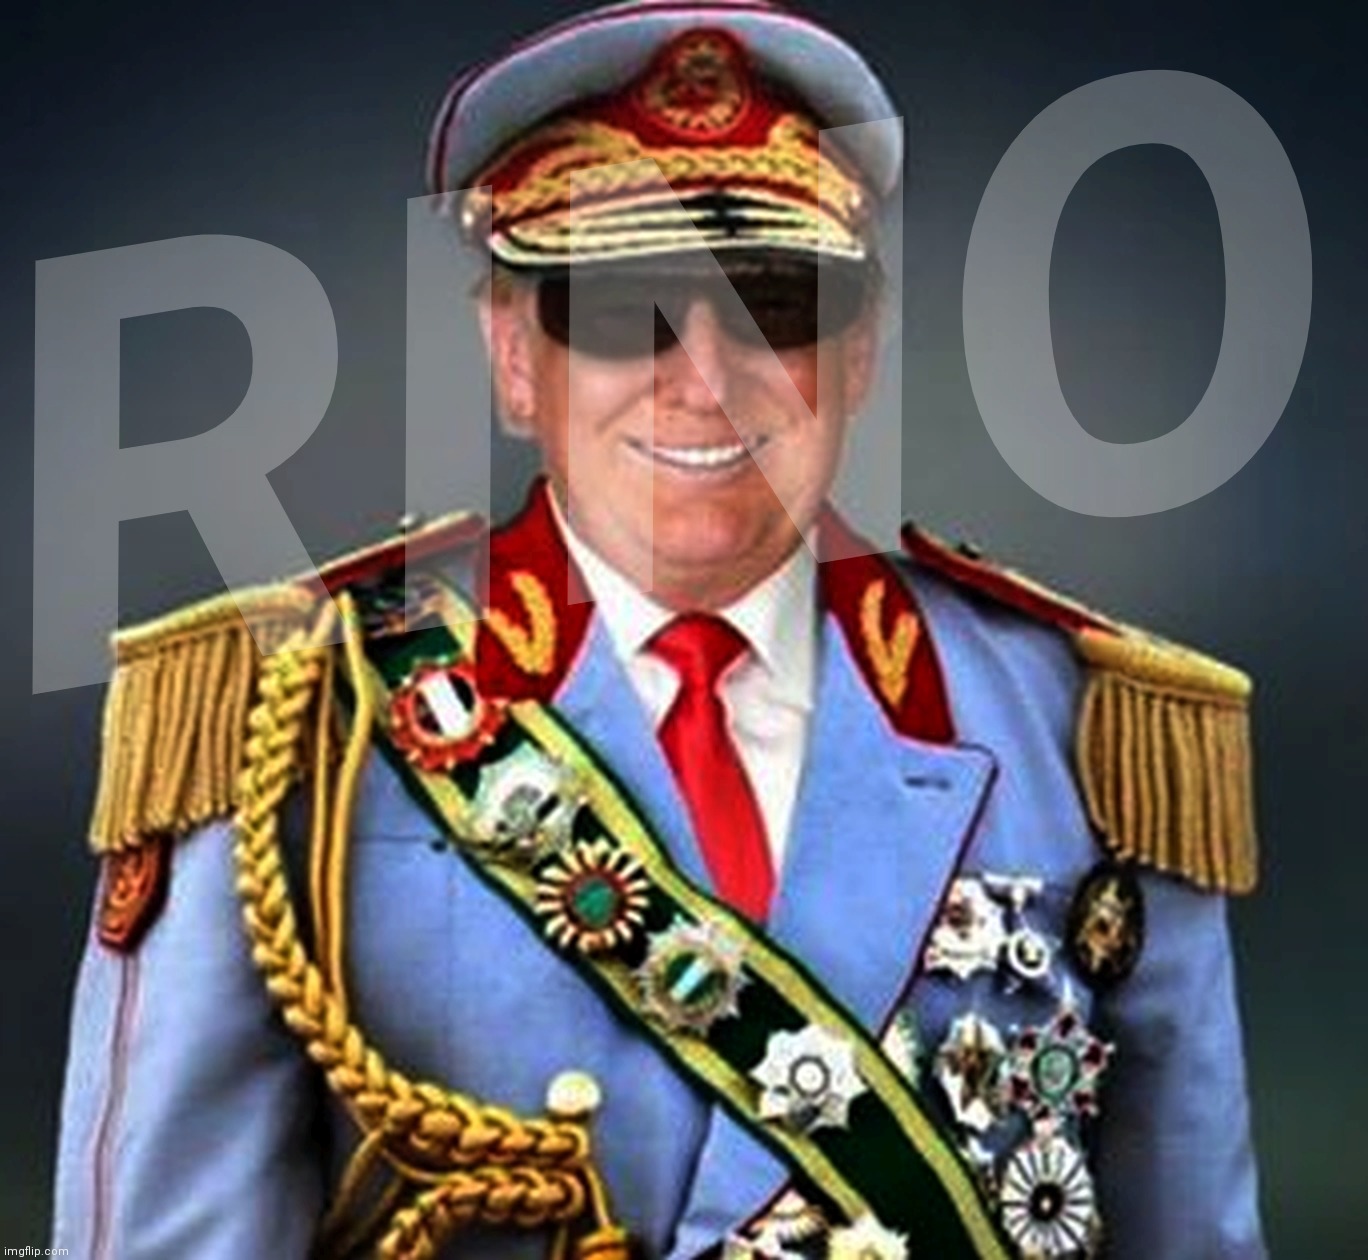 Generalissimo Caudillo Dictator Trump | RINO | image tagged in generalissimo caudillo dictator trump | made w/ Imgflip meme maker